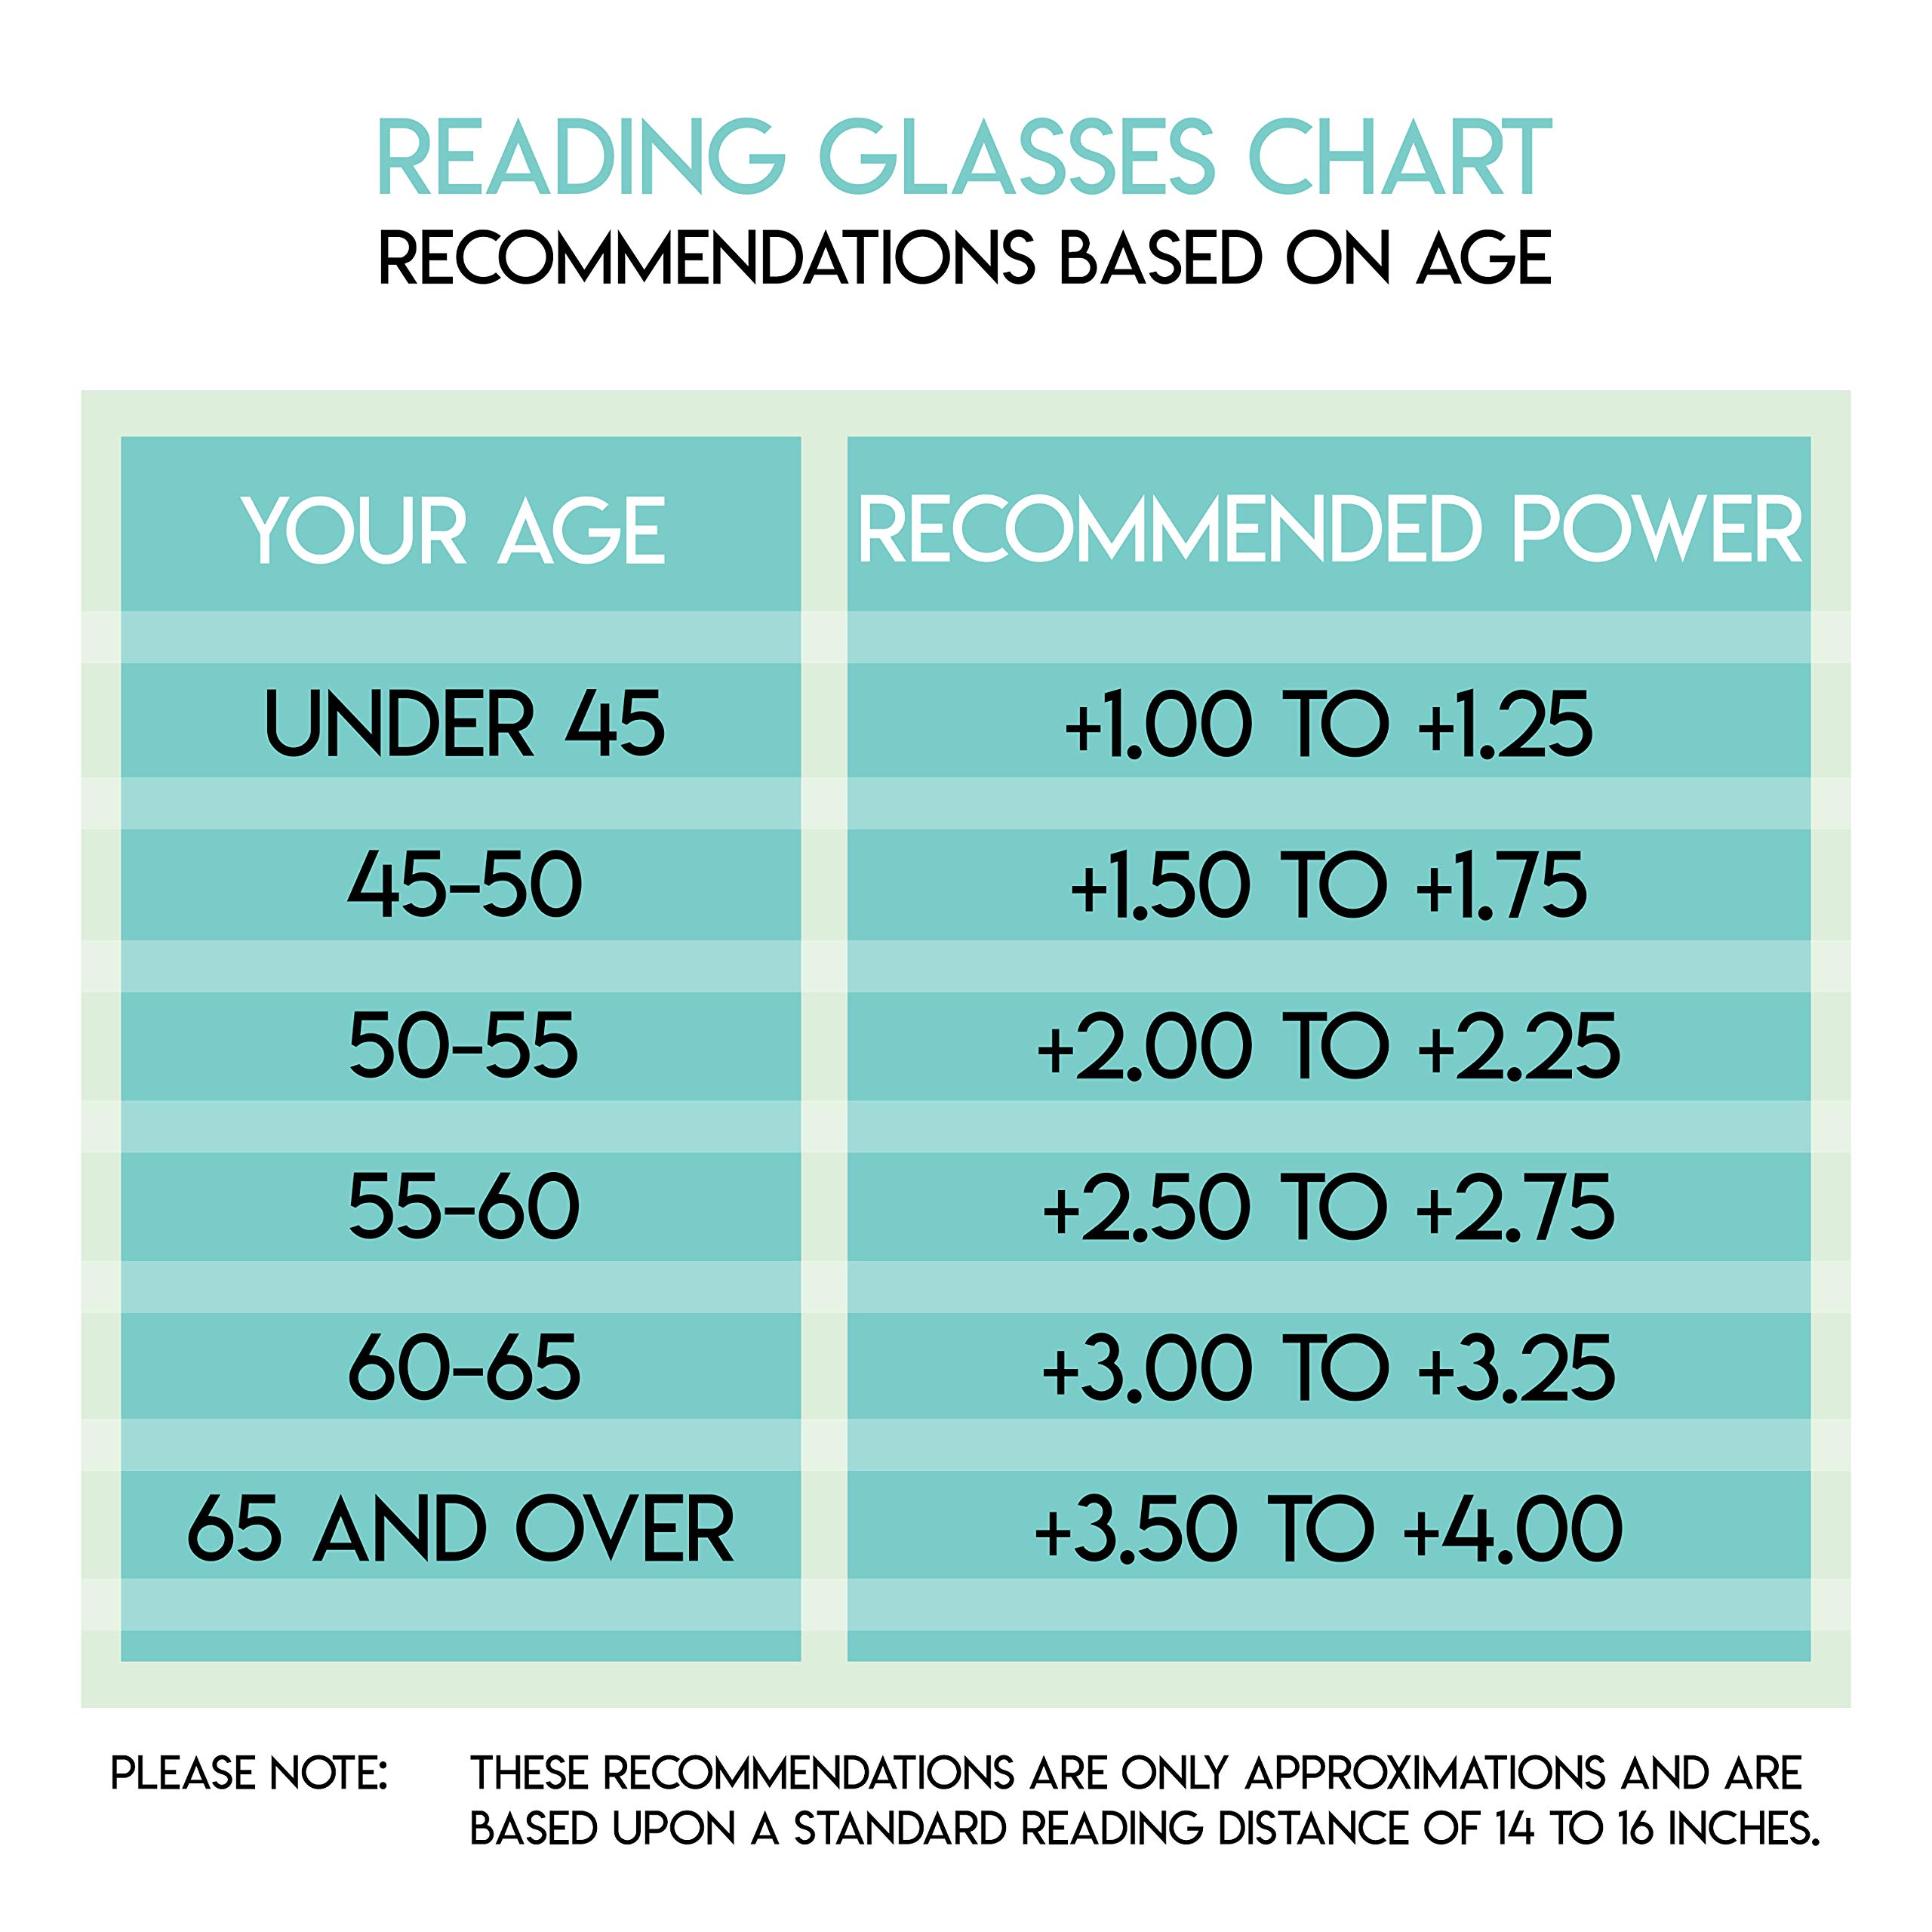 Success Eyewear Reading Glasses Set of 4 Black Quality Readers Spring Hinge Glasses for Reading for Men and Women